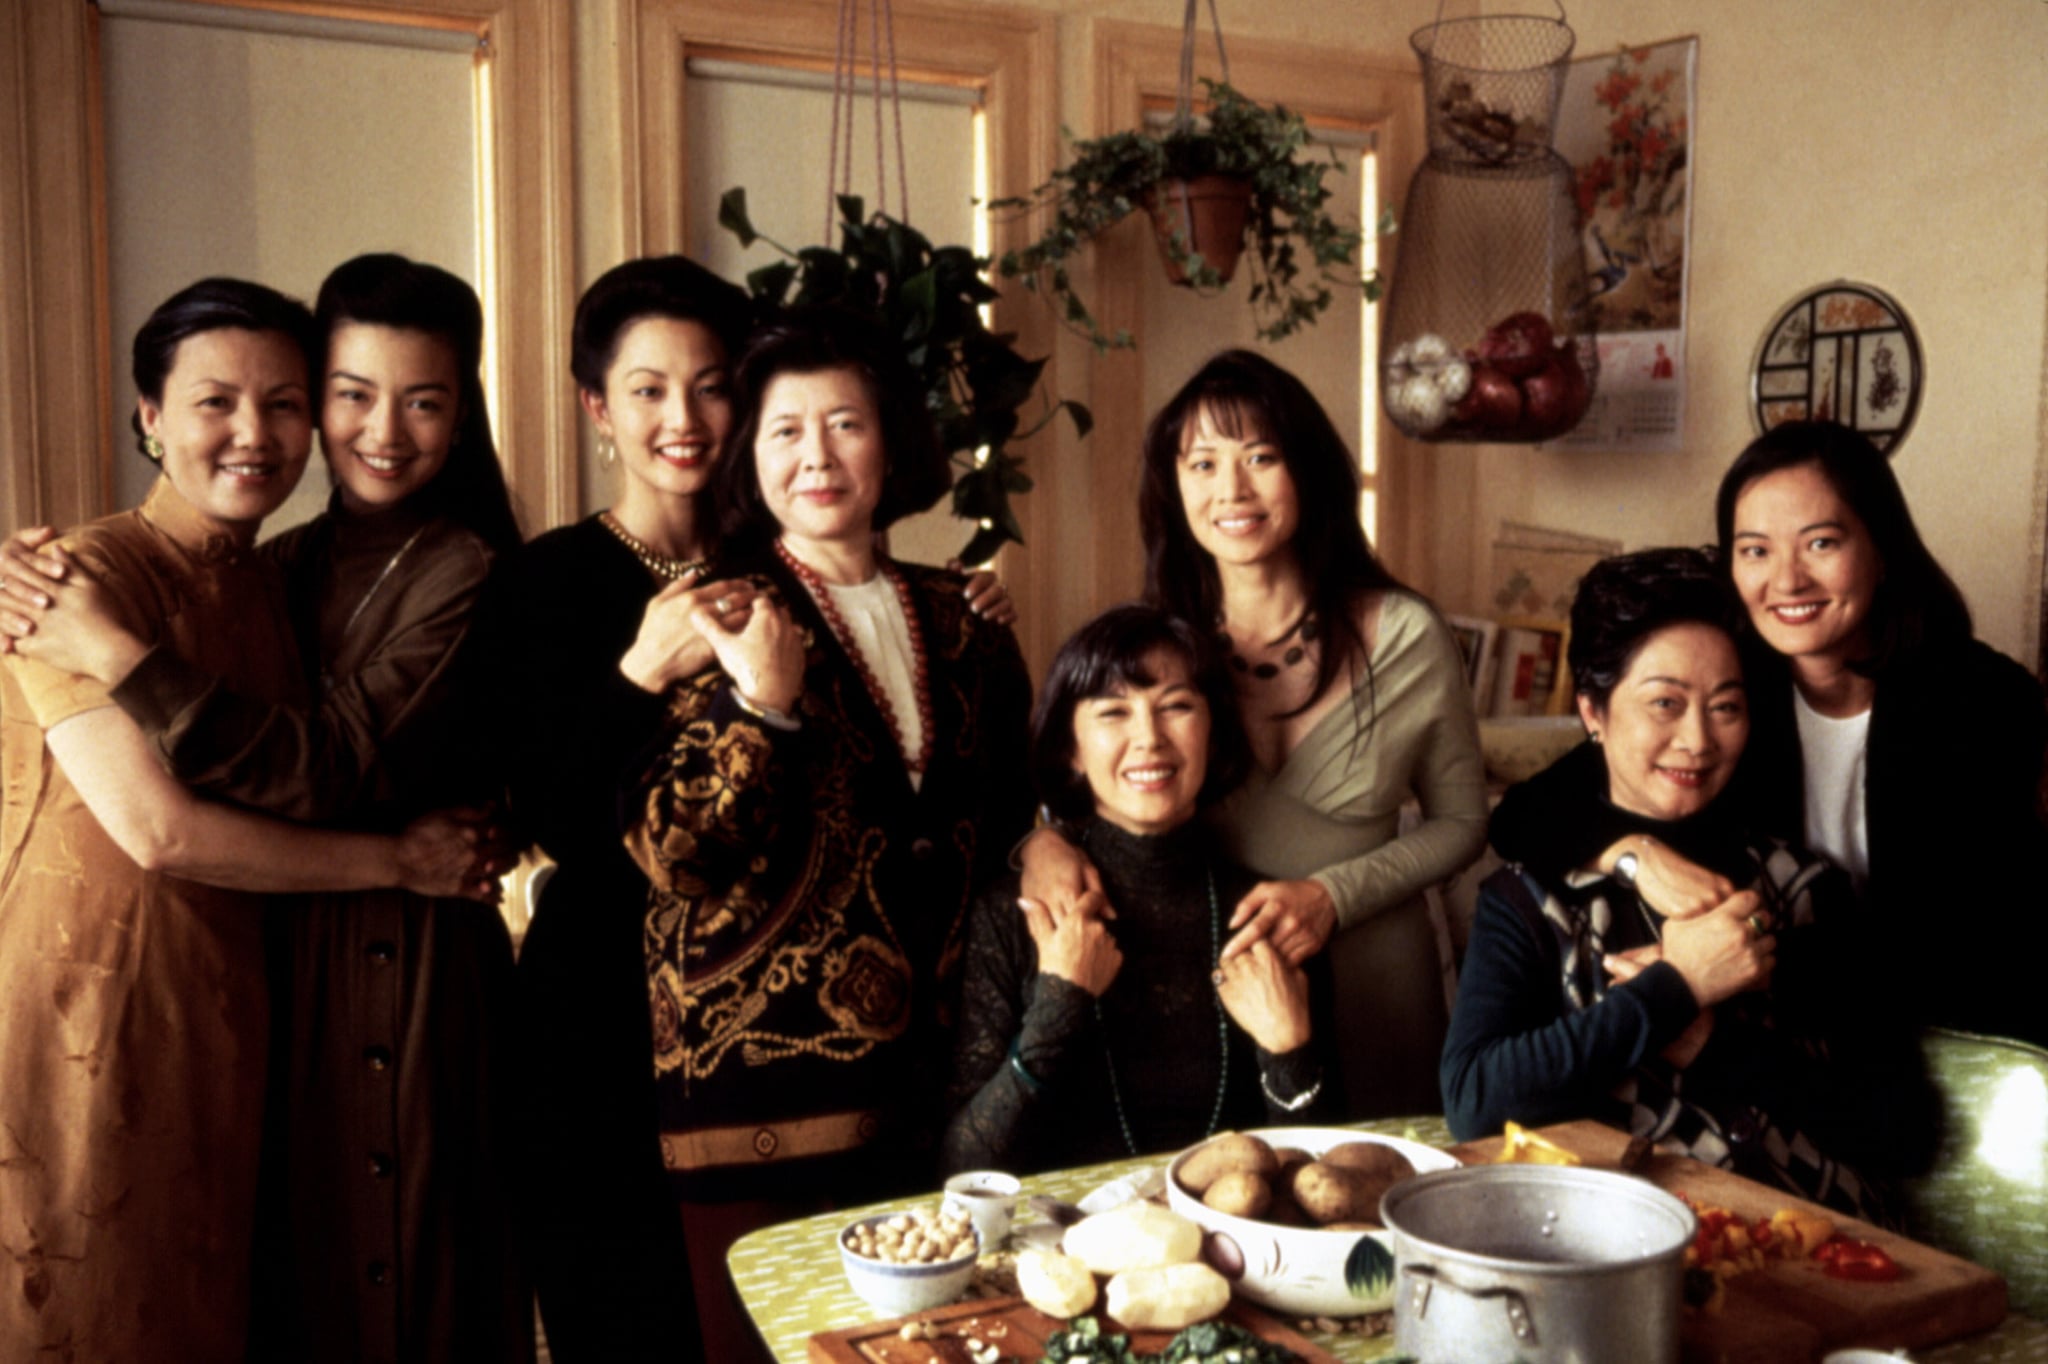 THE JOY LUCK CLUB, Kieu Chinh, Ming-Na Wen, Tamlyn Tomita, Tsai Chin, France Nuyen, Lauren Tom, Lisa Lu, Rosalind Chao, 1993